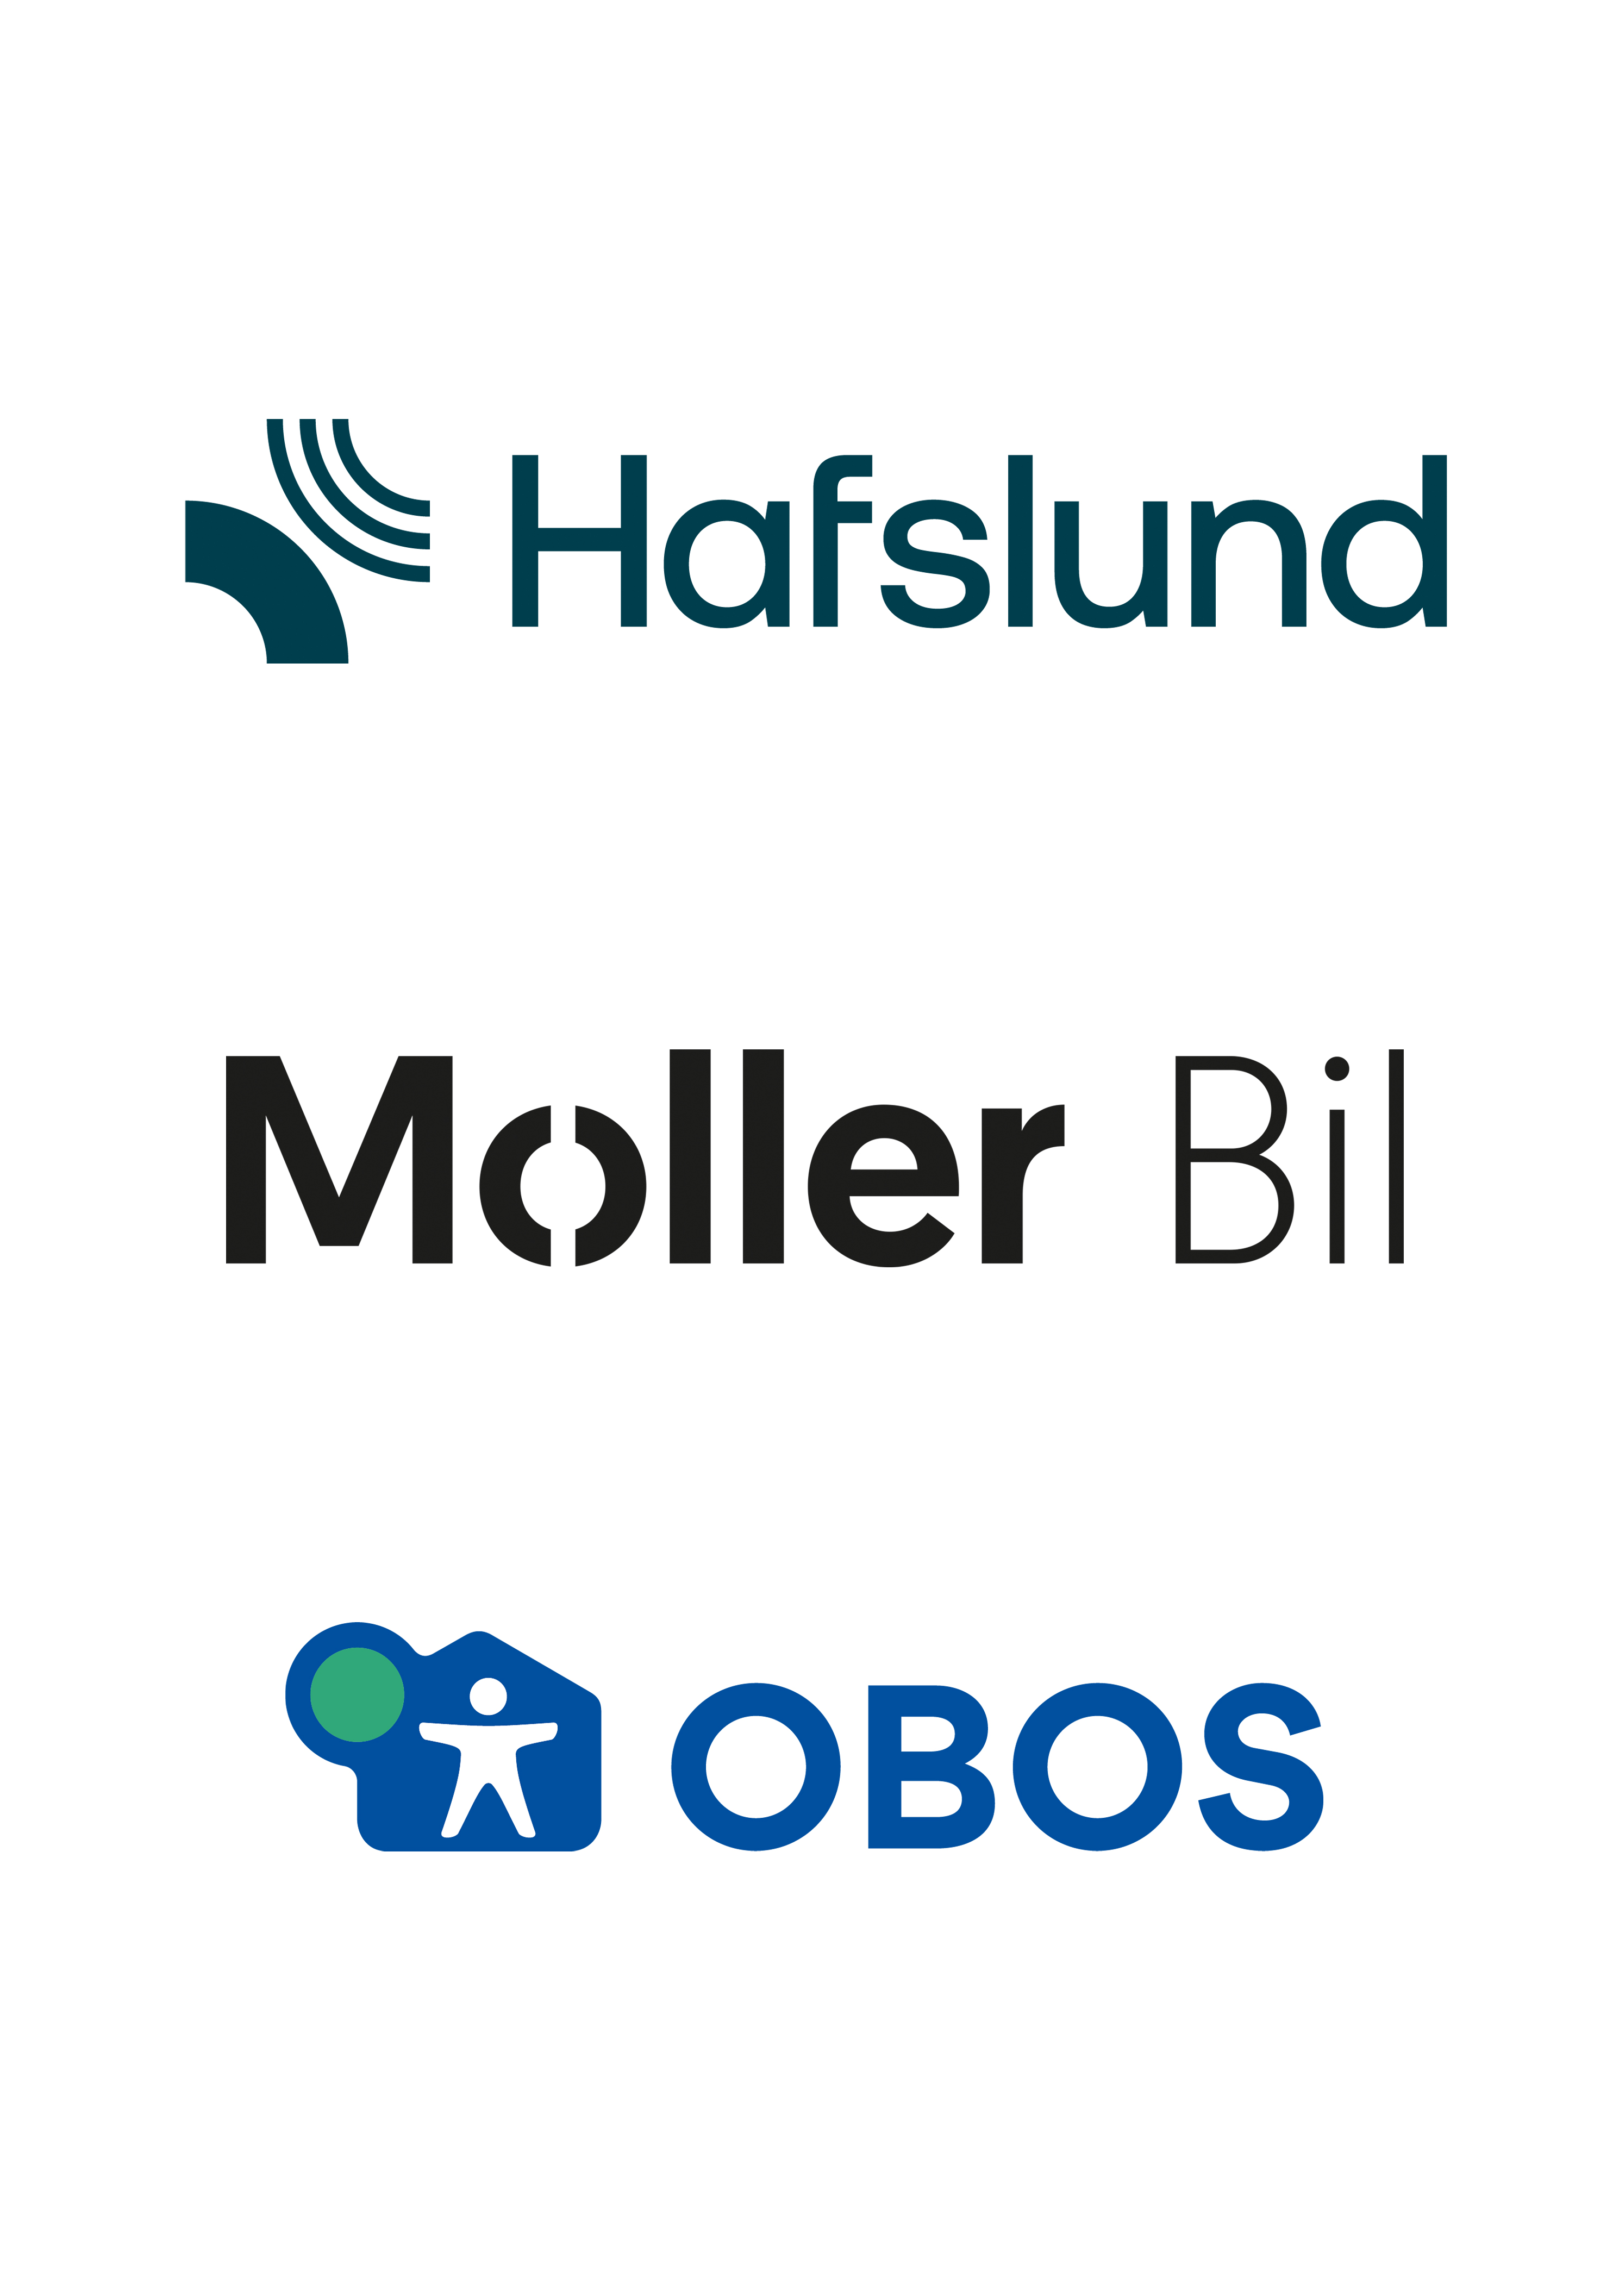 Logo Hafslund, Møller Bli, Obos.